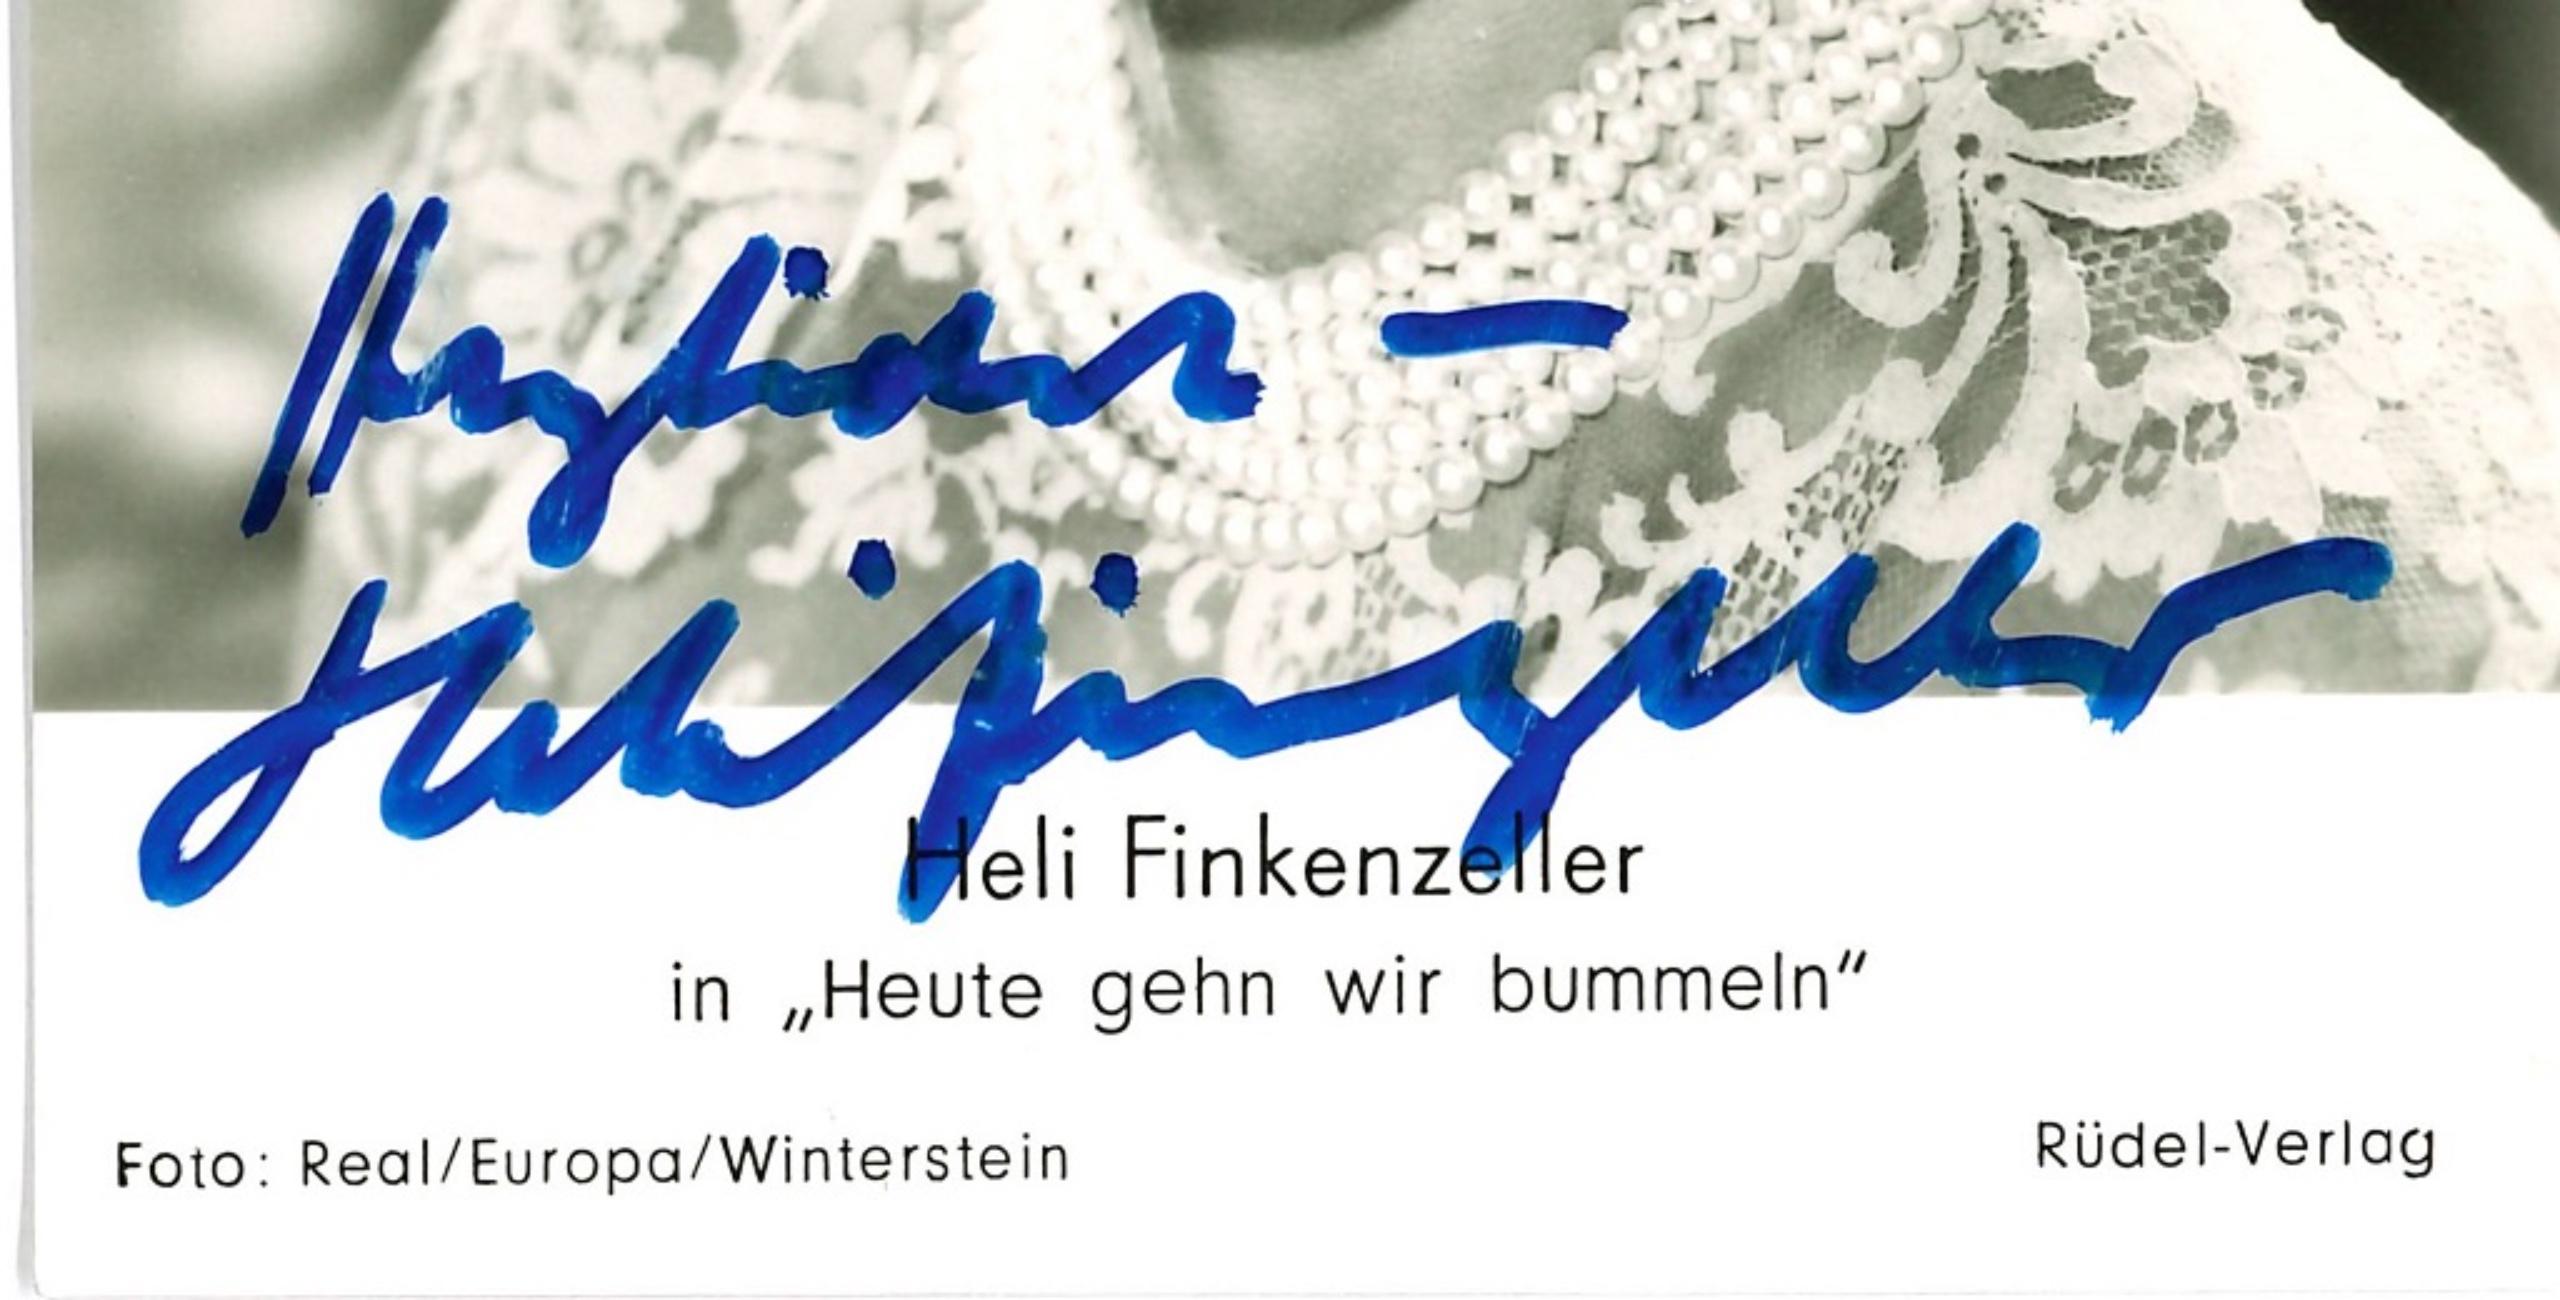 Autographed Portrait of Heli Finkenzeller - Vintage b/w Postcard - 1950s - Photograph by Unknown